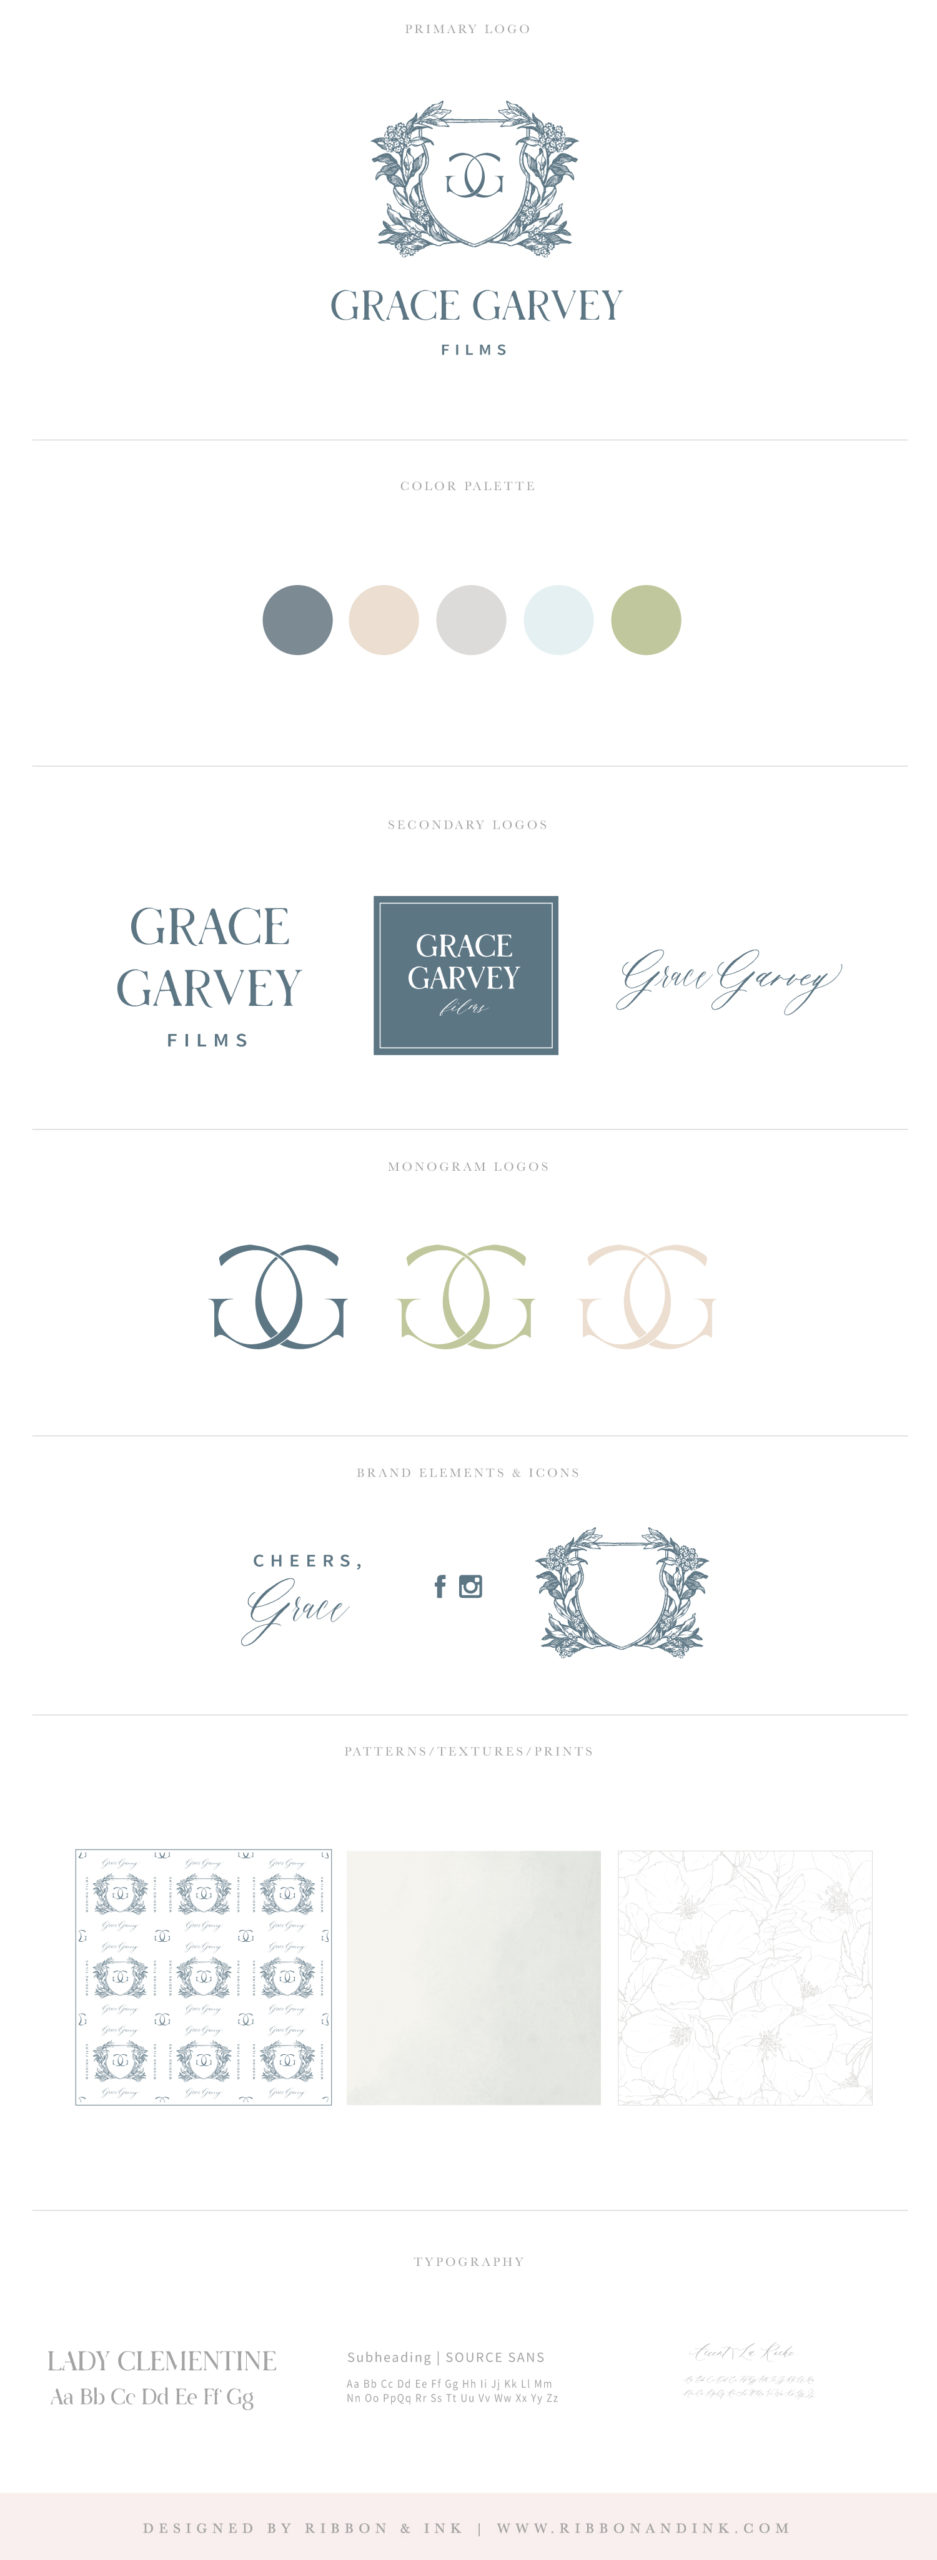 brand board / custom crest / branding for creatives and wedding businesses / logo designer / fine art / wedding videographer